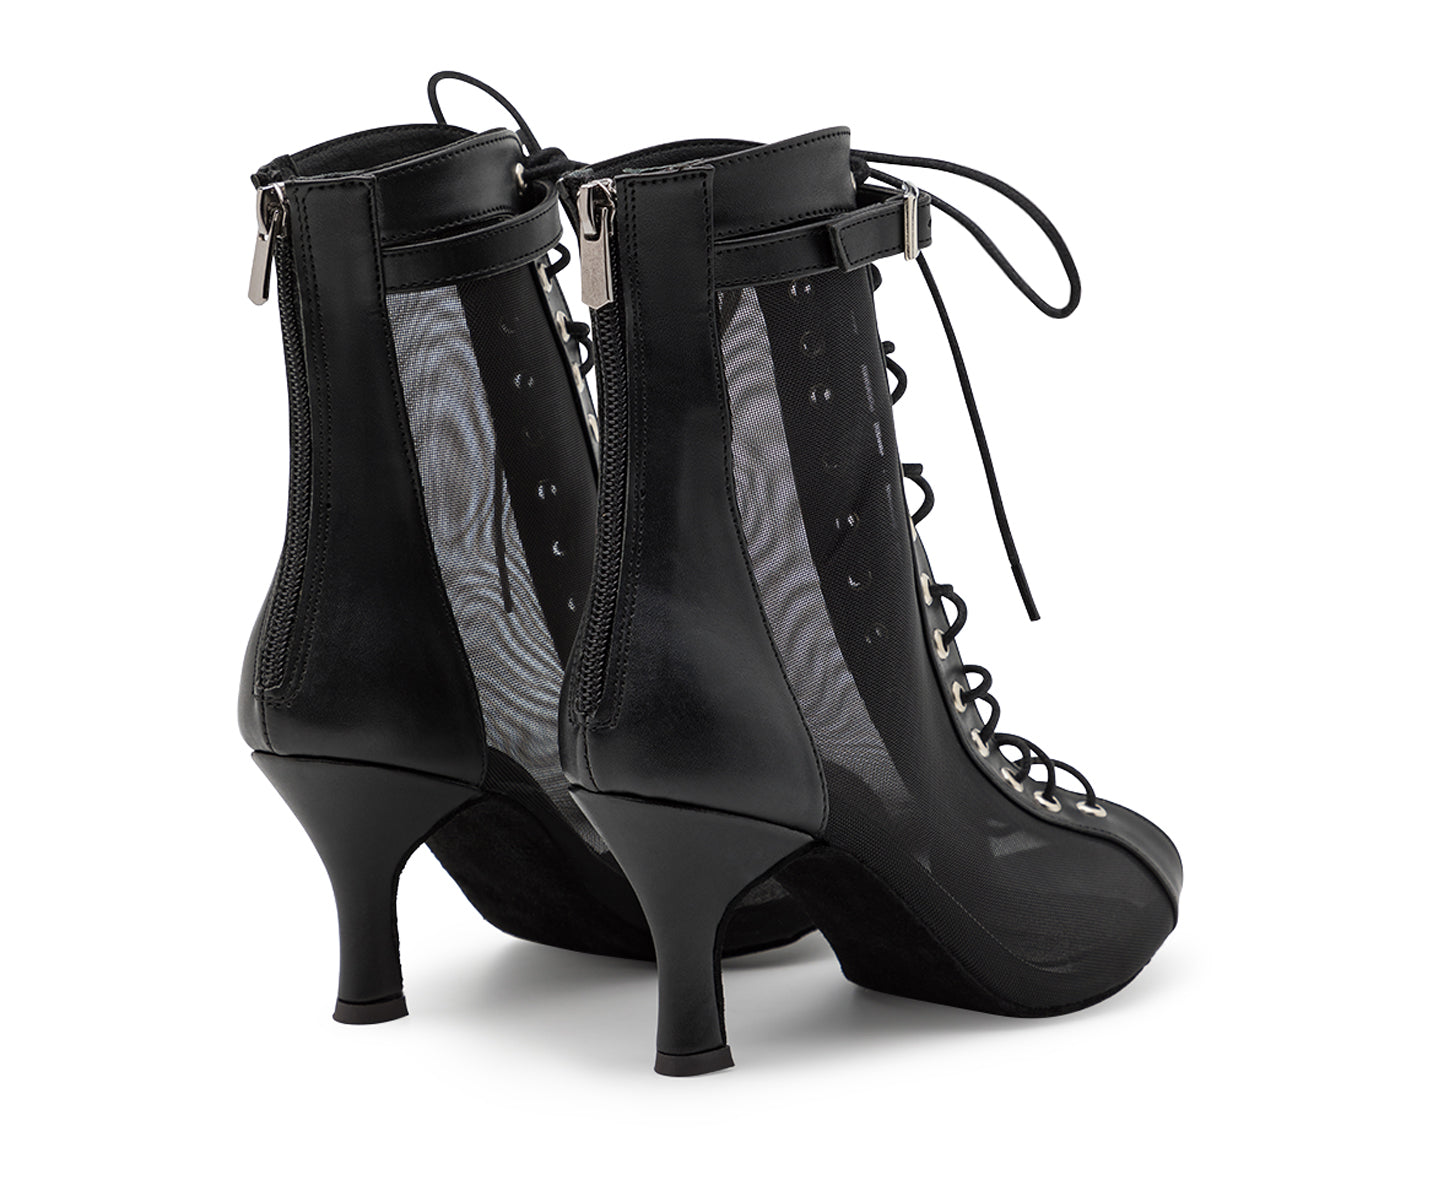 Tarff dance shoes in black